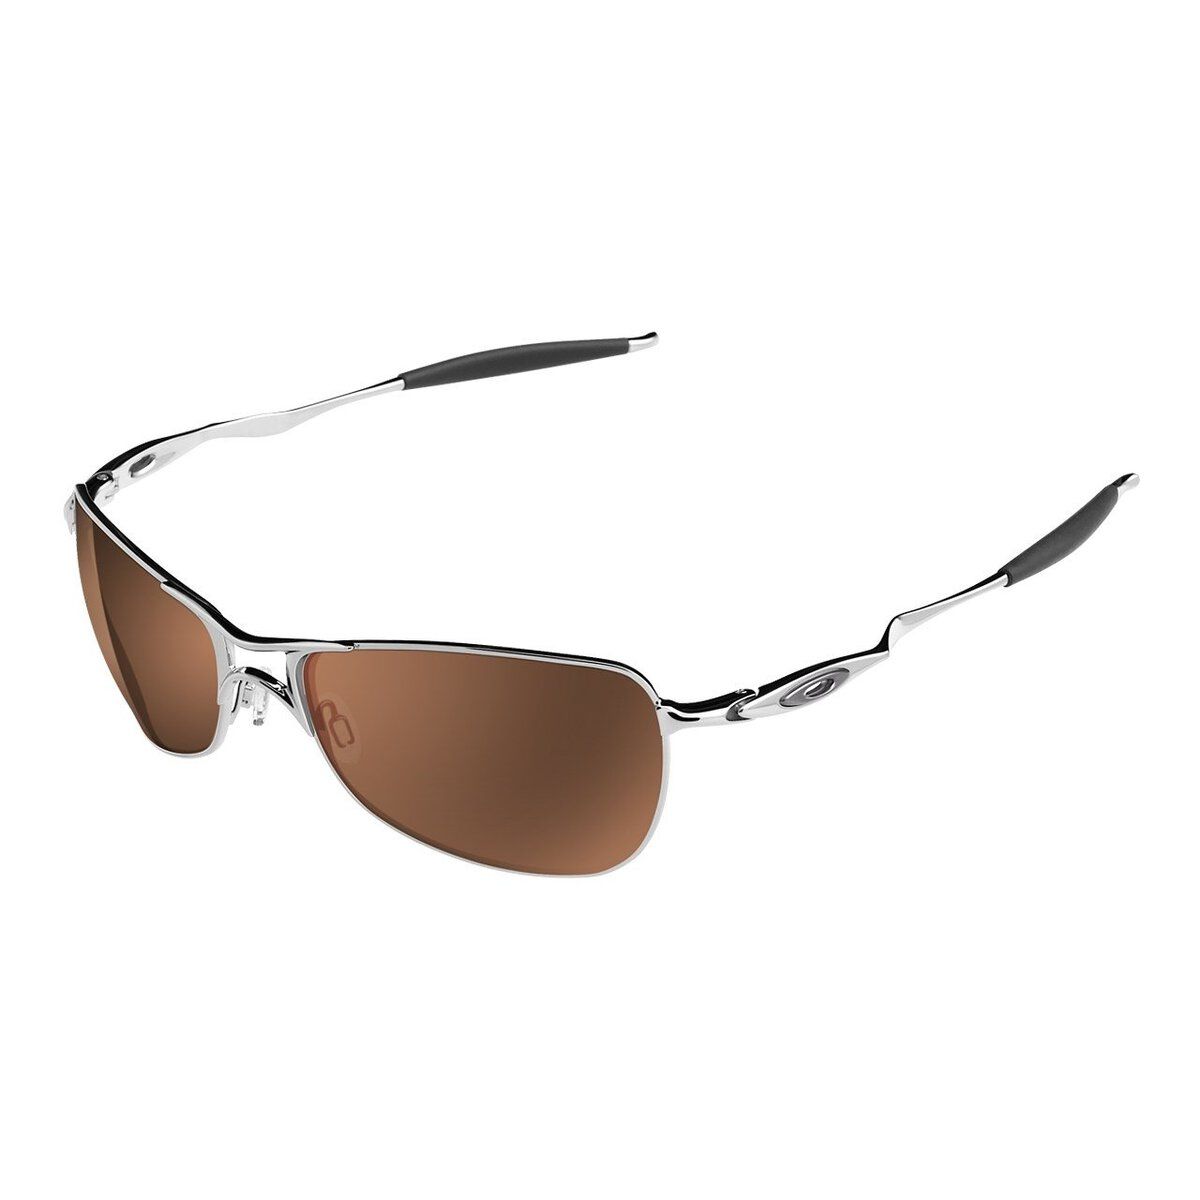 www.evo.com_oakley-crosshair-sunglasses-.jpg